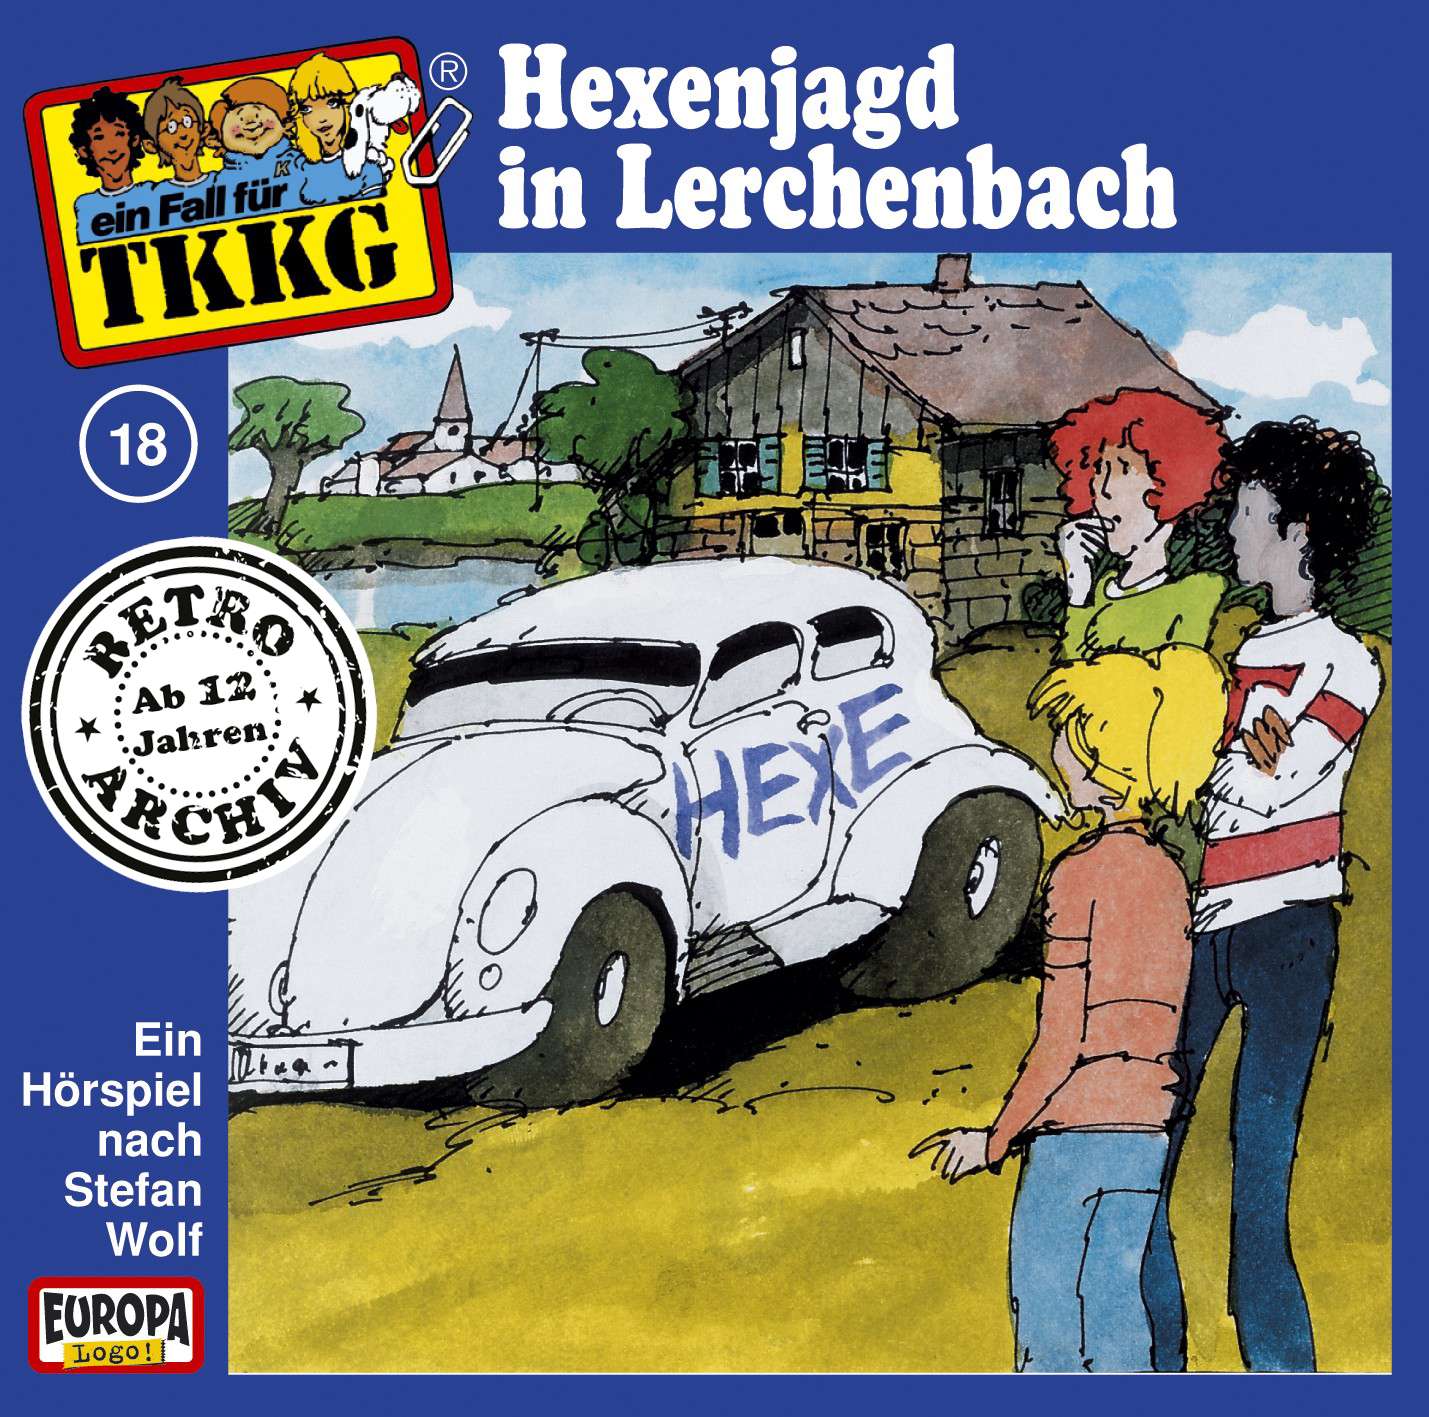 TKKG Retro-Archiv - Hexenjagd im Lerchenbach